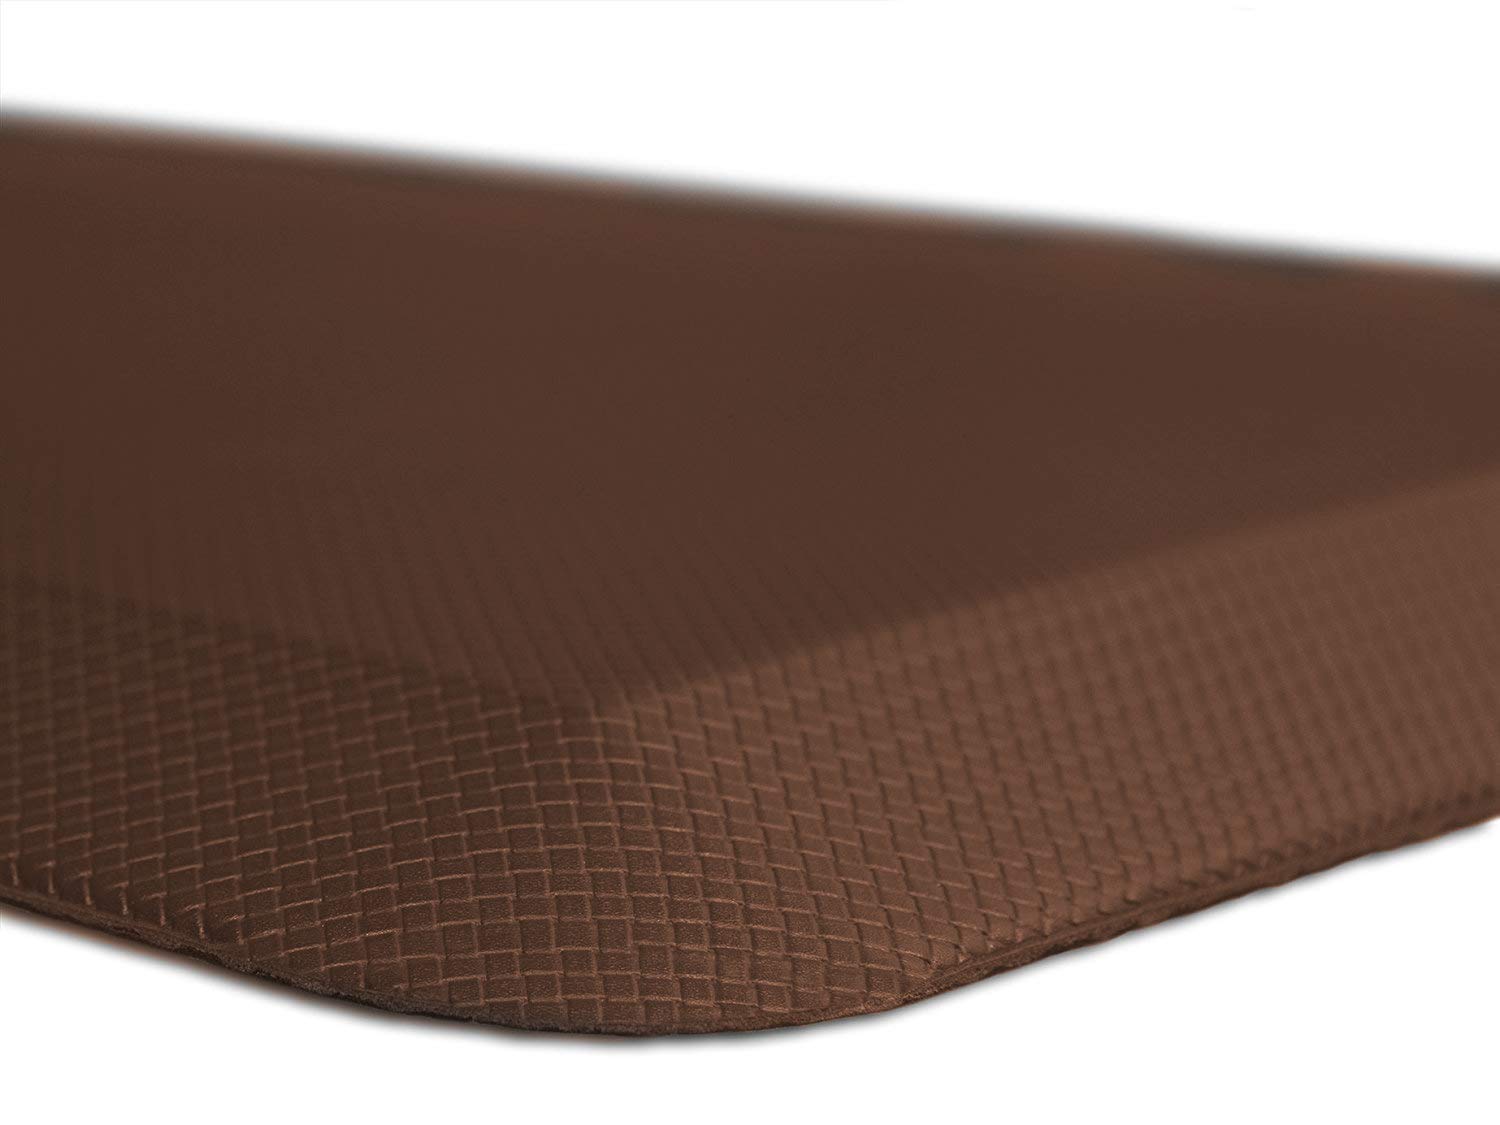 Sky Solutions Anti Fatigue Mat - Cushioned Comfort Floor Mats For